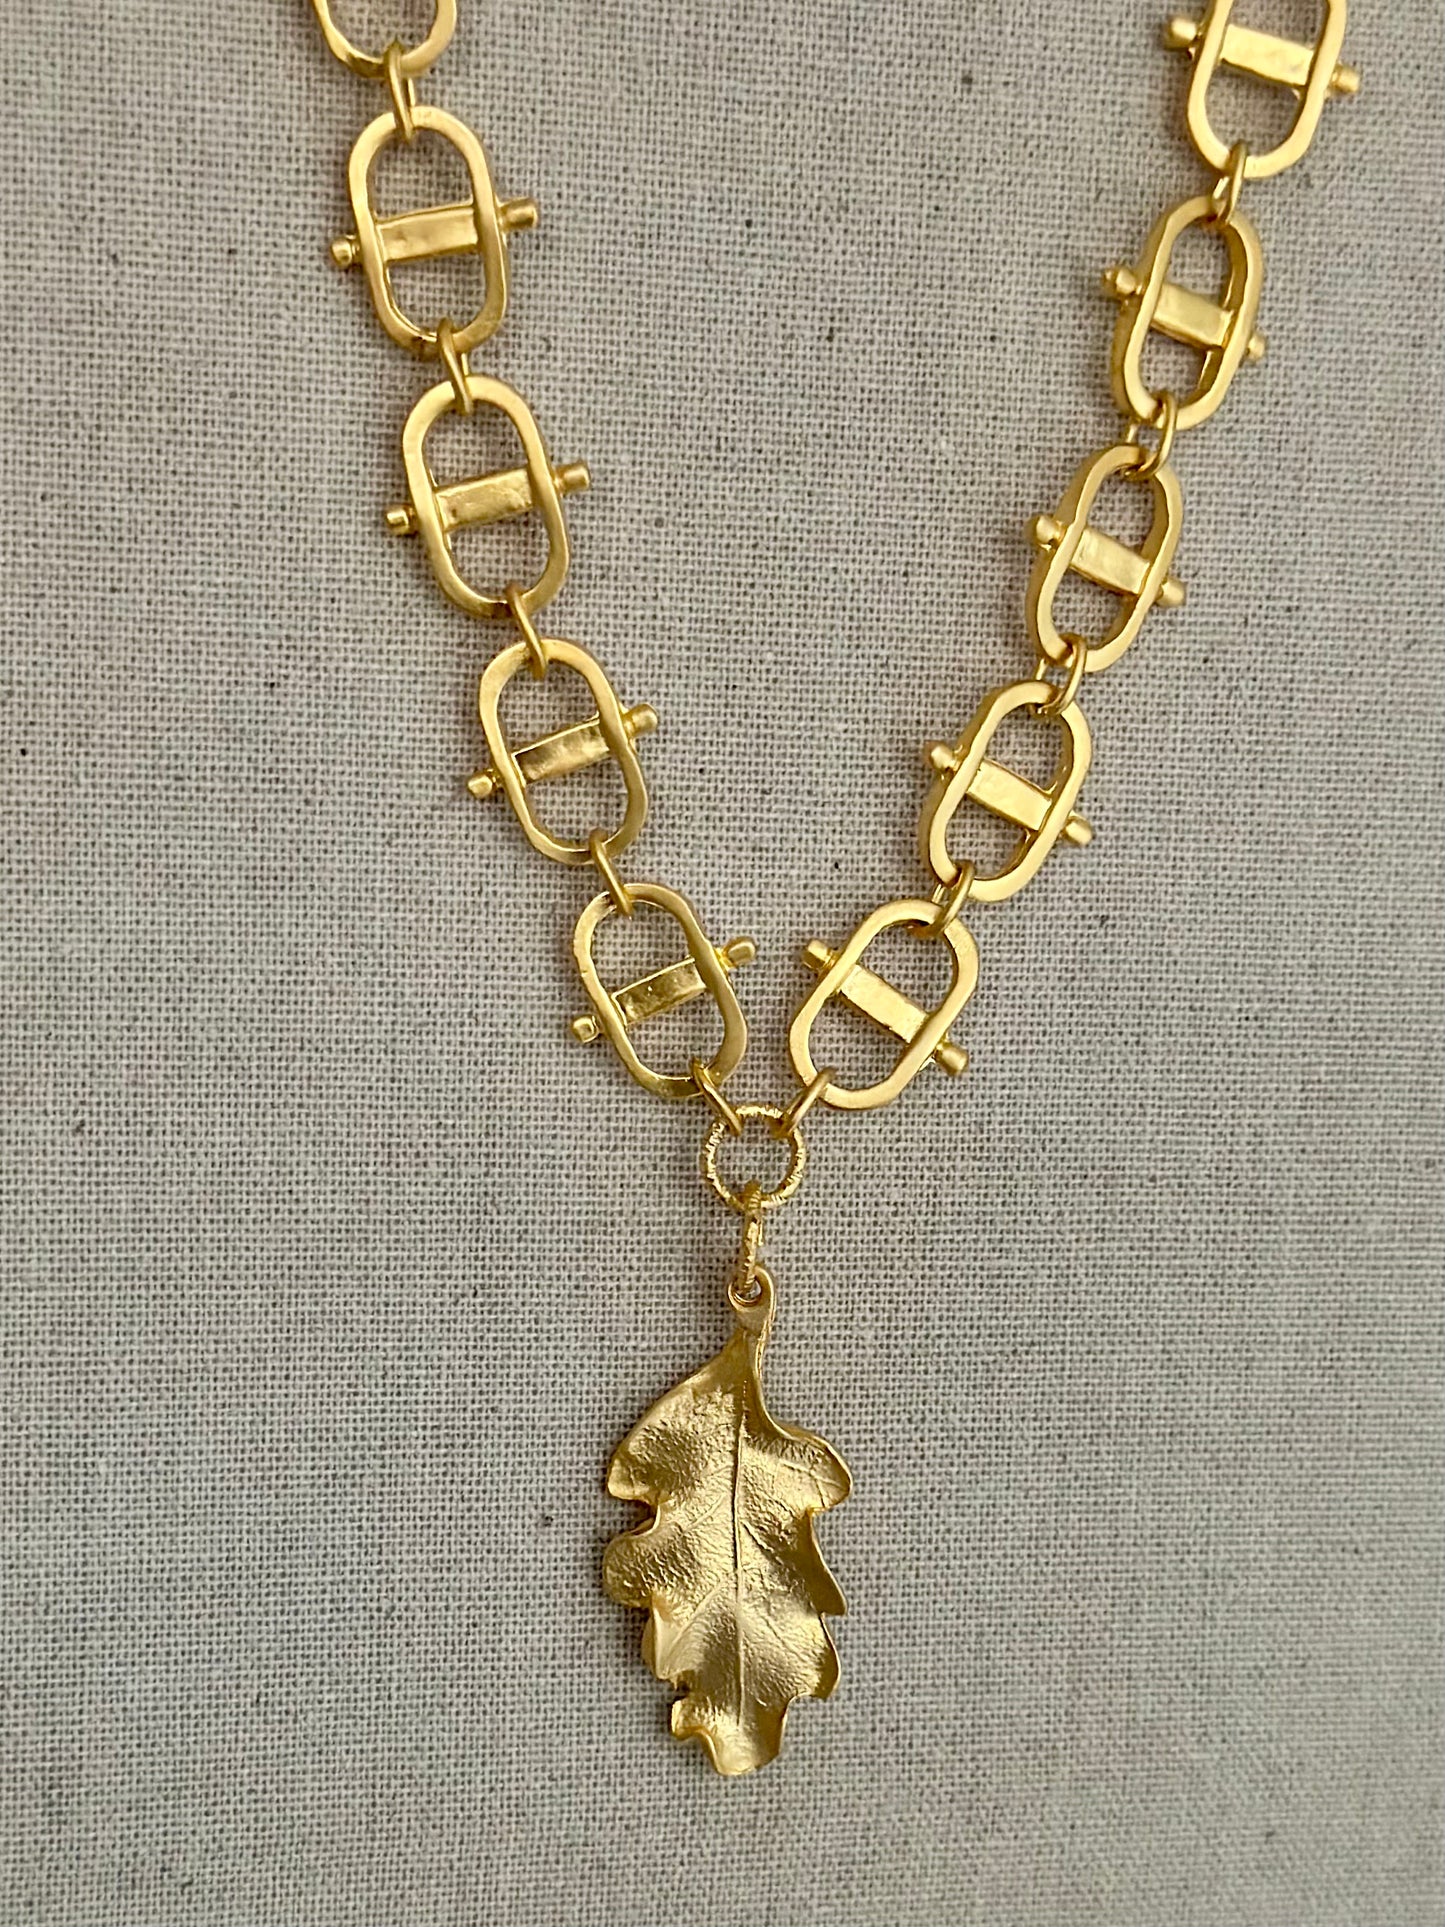 New leaf pendant necklace